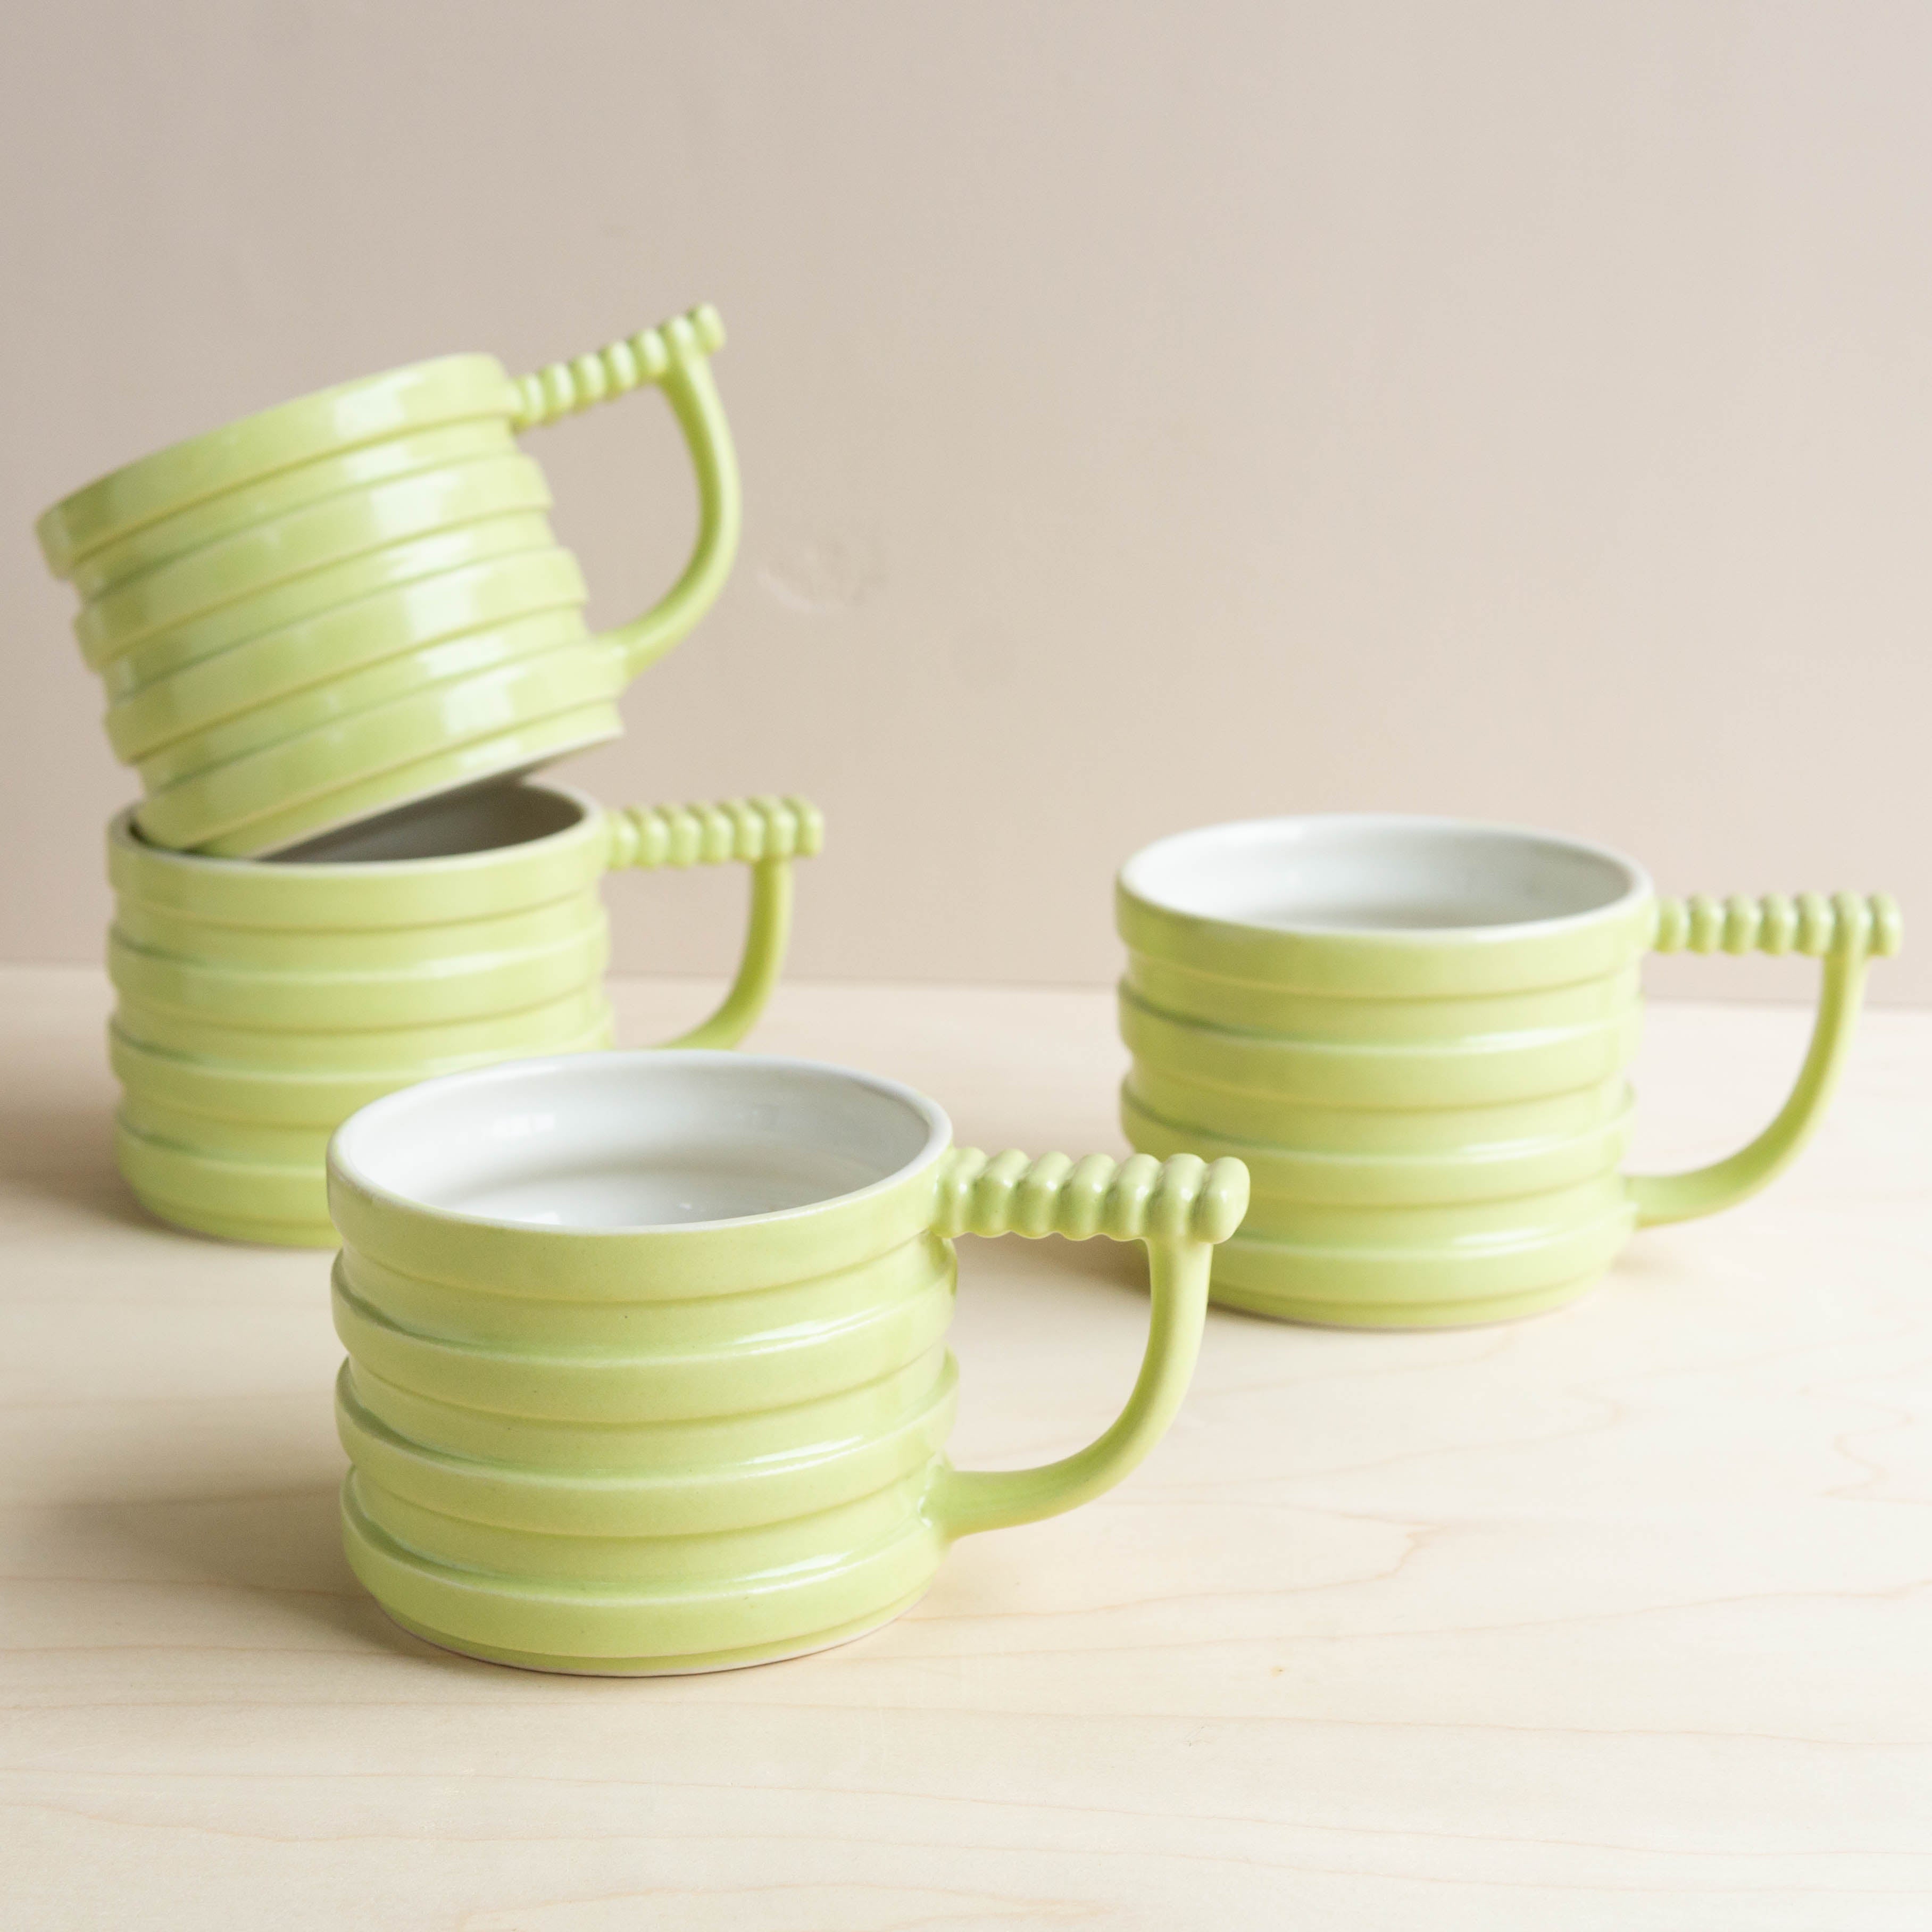 Marita Manson Ceramics: Chartreuse Corrugate Mug